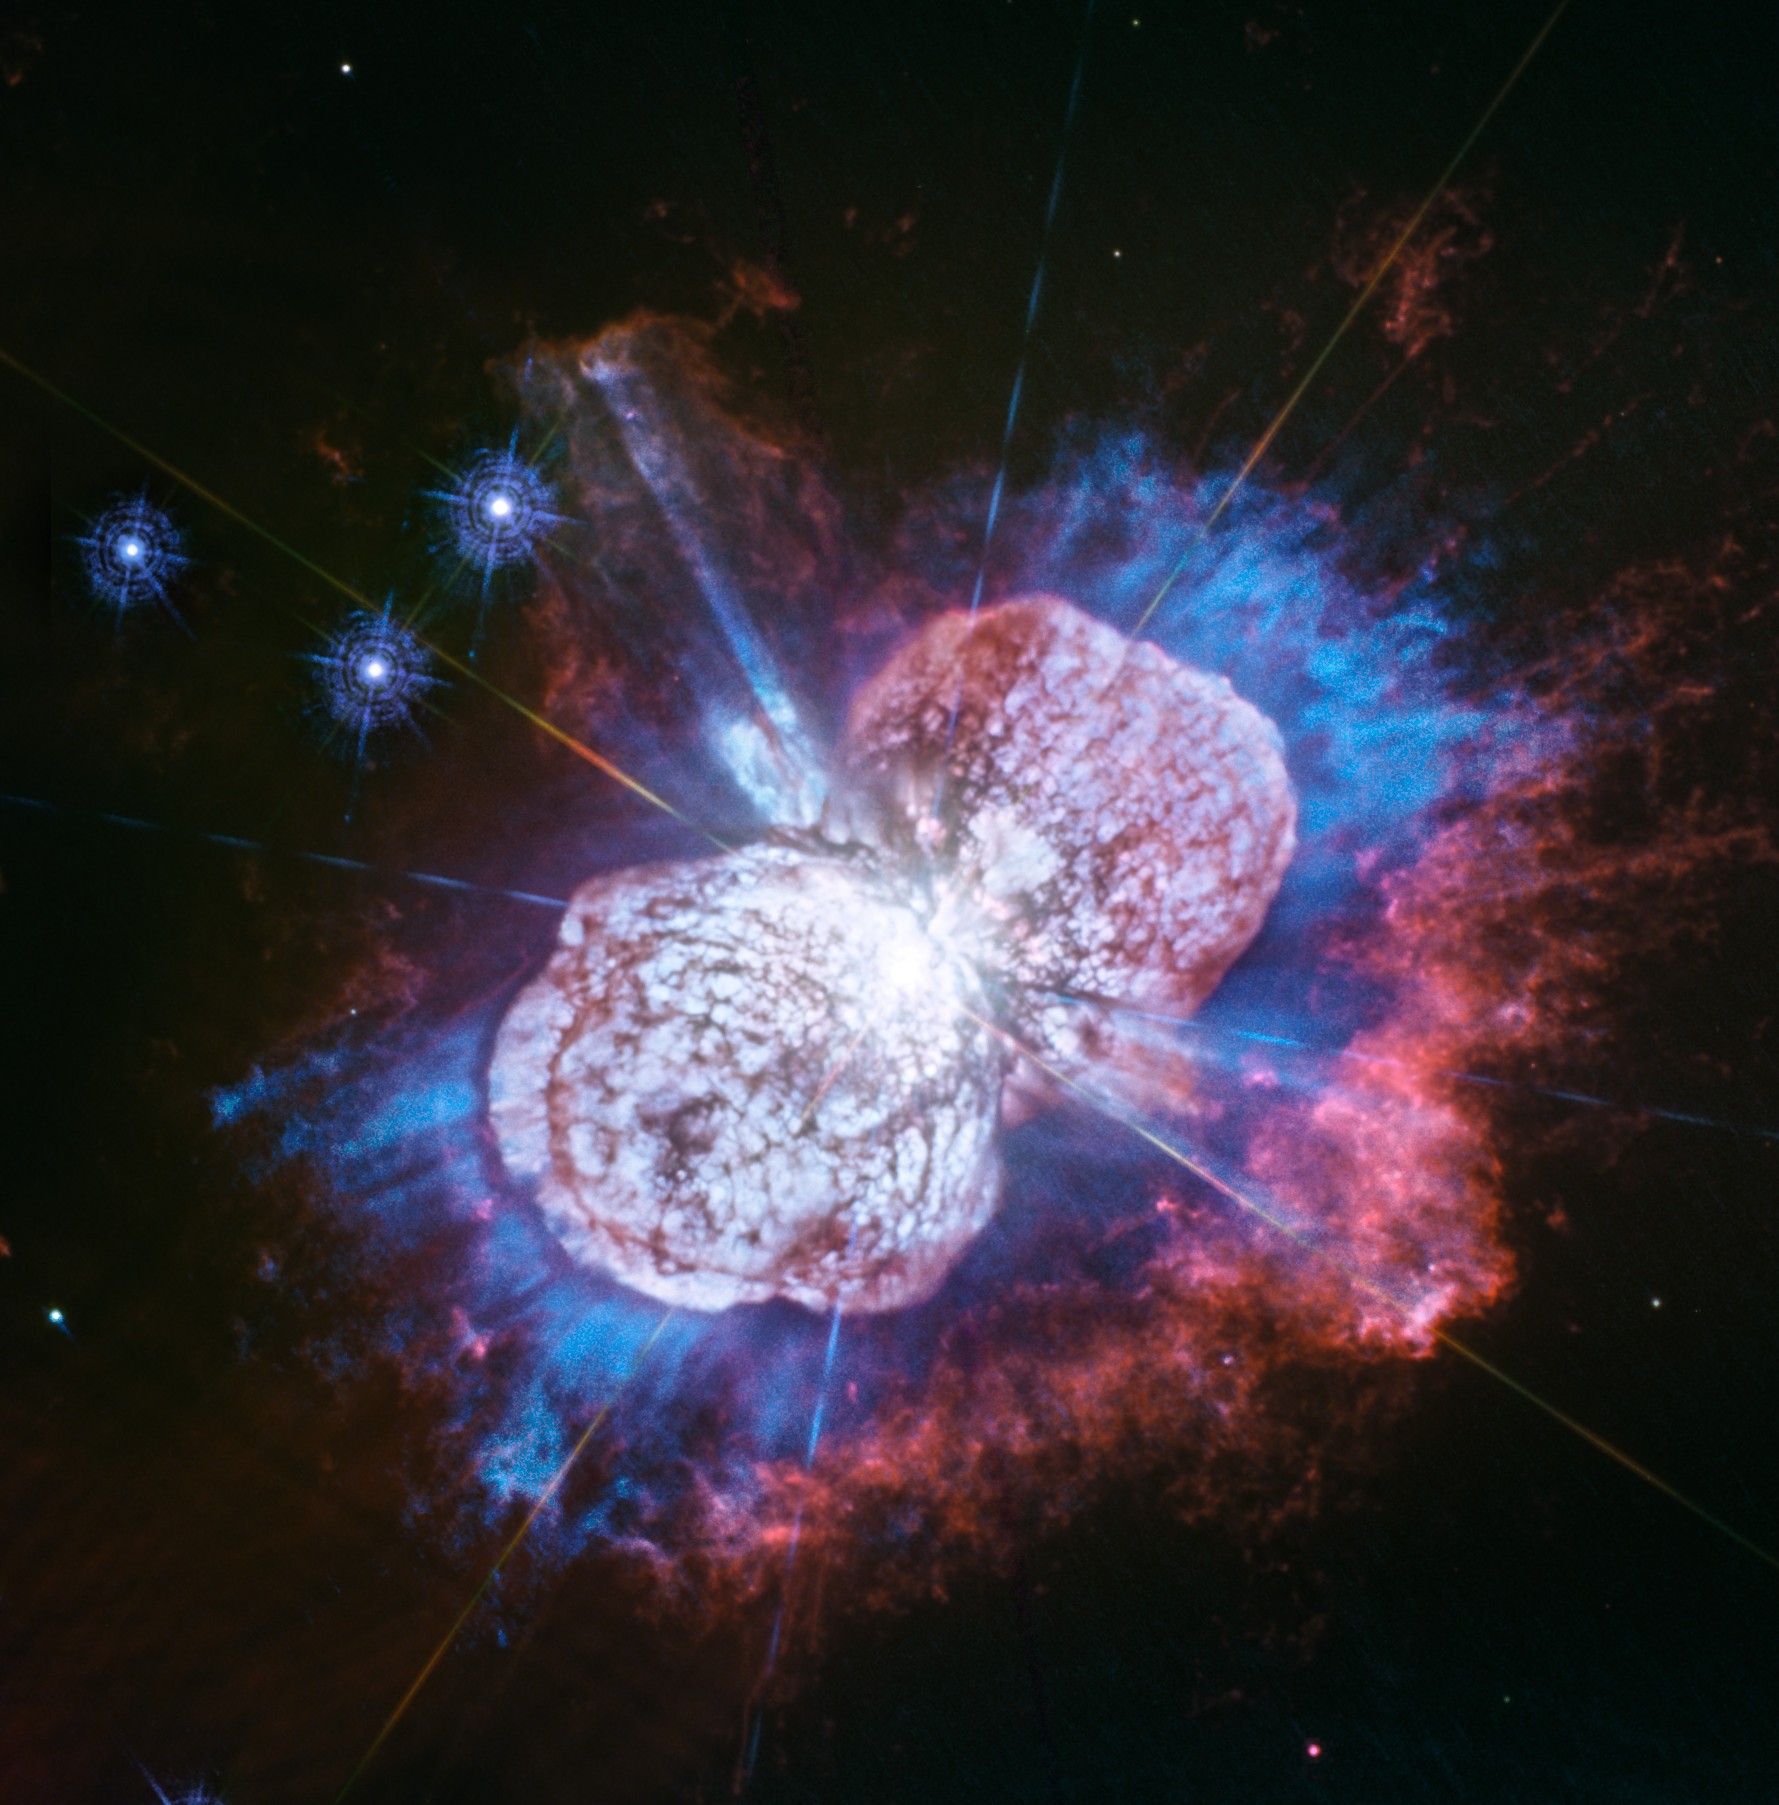 Hubble mostra explosão da constelação Eta Carinae (Foto: NASA, ESA, N. Smith (University of Arizona, Tucson), and J. Morse (BoldlyGo Institute, New York))